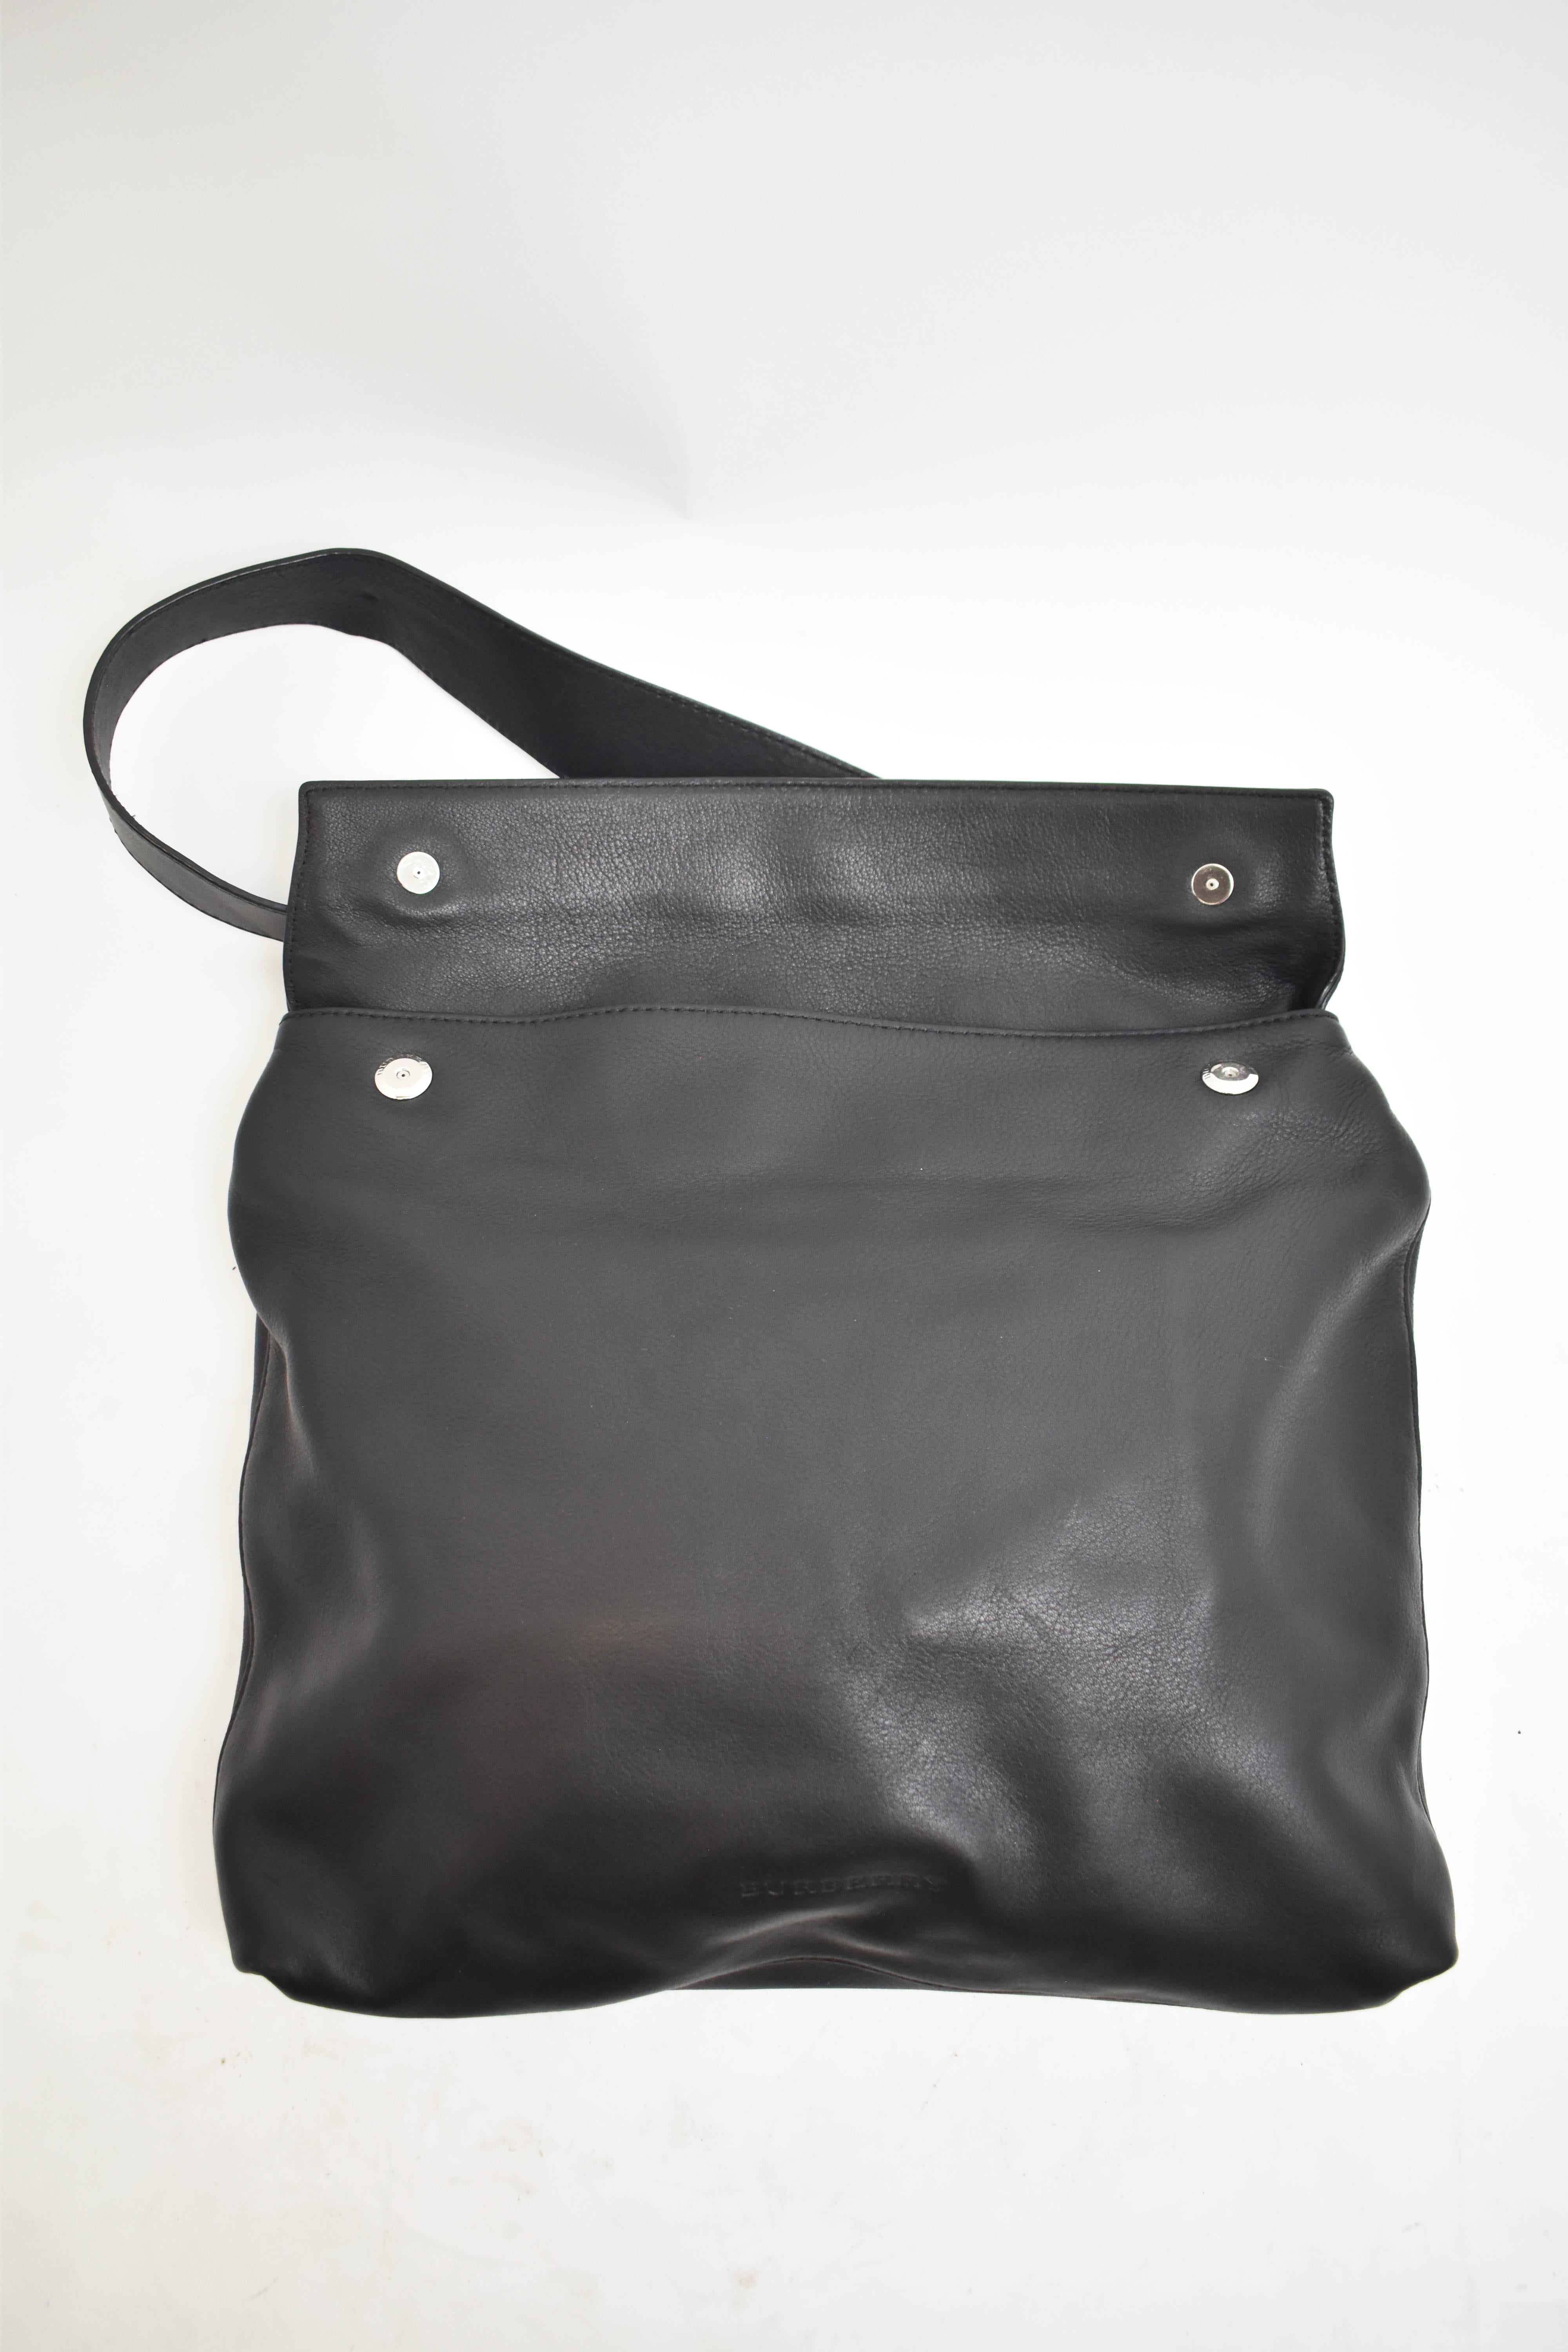 Women's Burberry Black Leather Handbag with Silver Hardware Padlock 